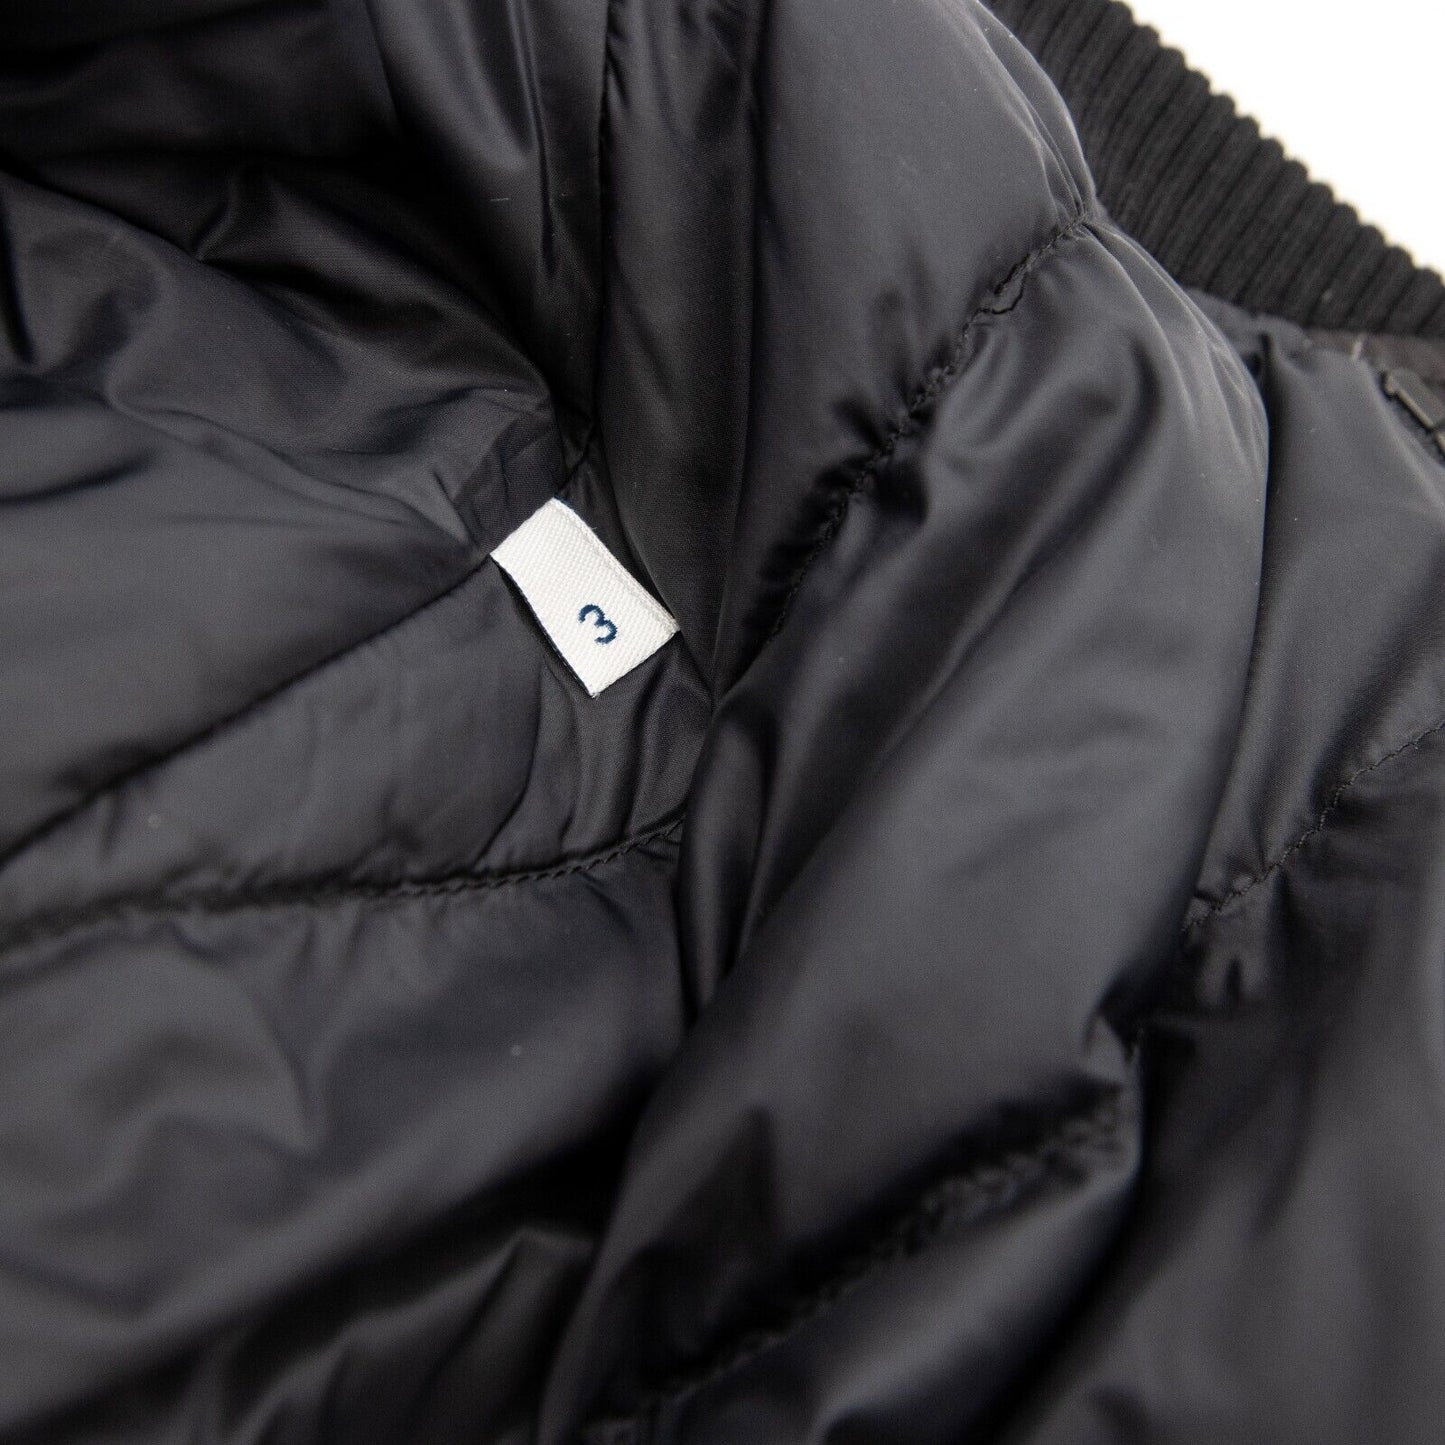 Moncler baseball jacket black & white  size M RRP £1340 (#H1)